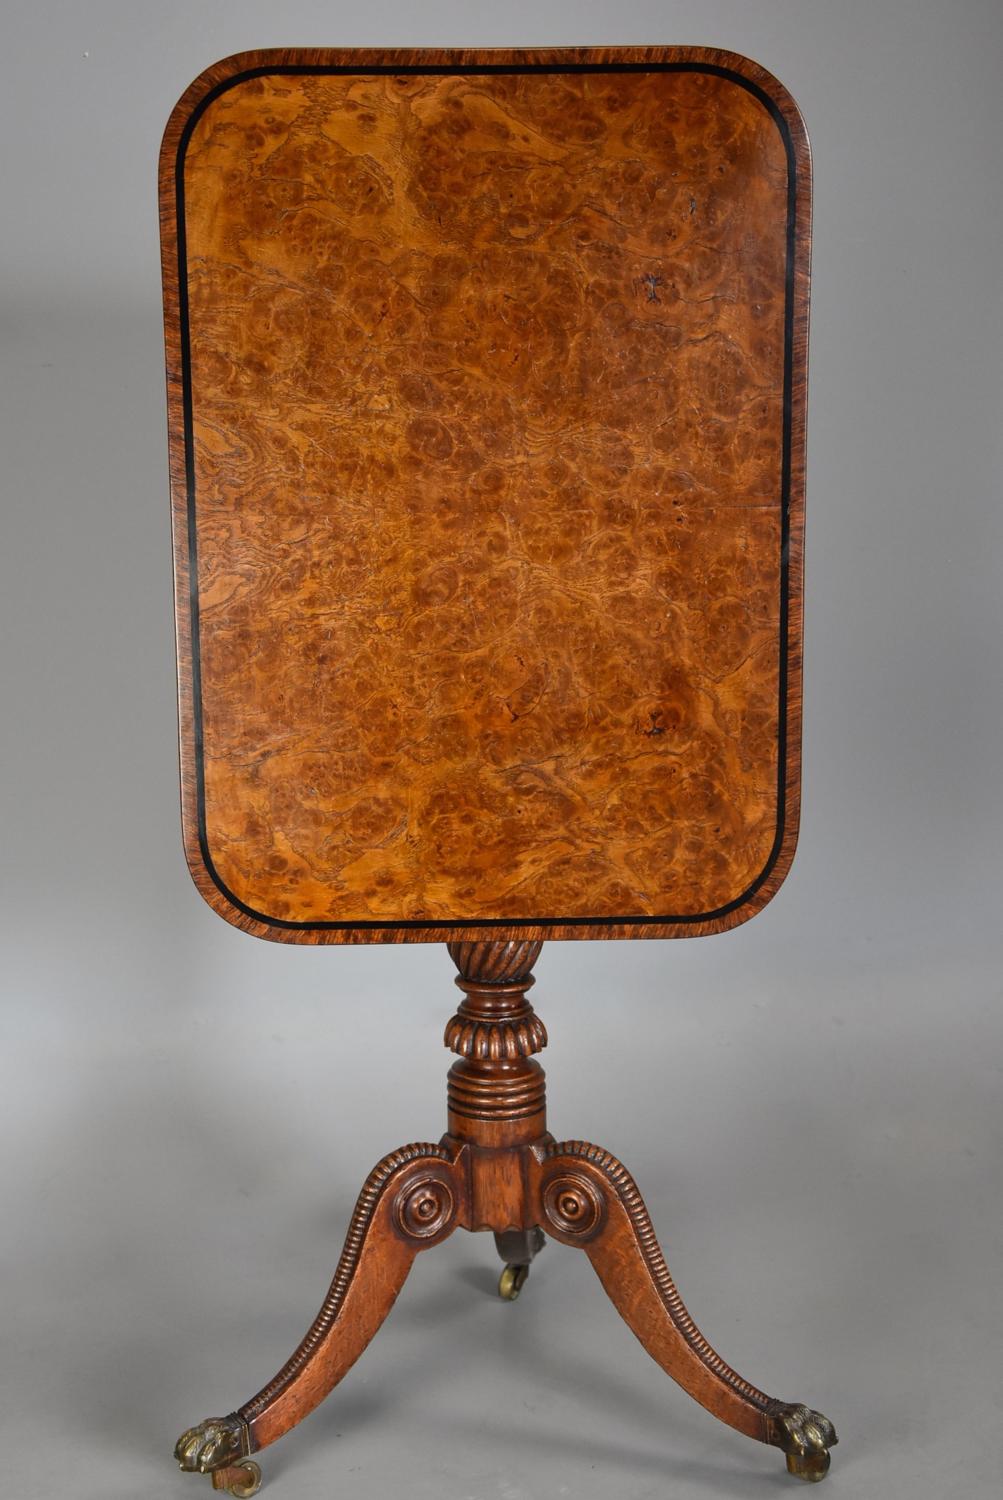 Rare fine quality early 19th century Regency burr oak tilt top table